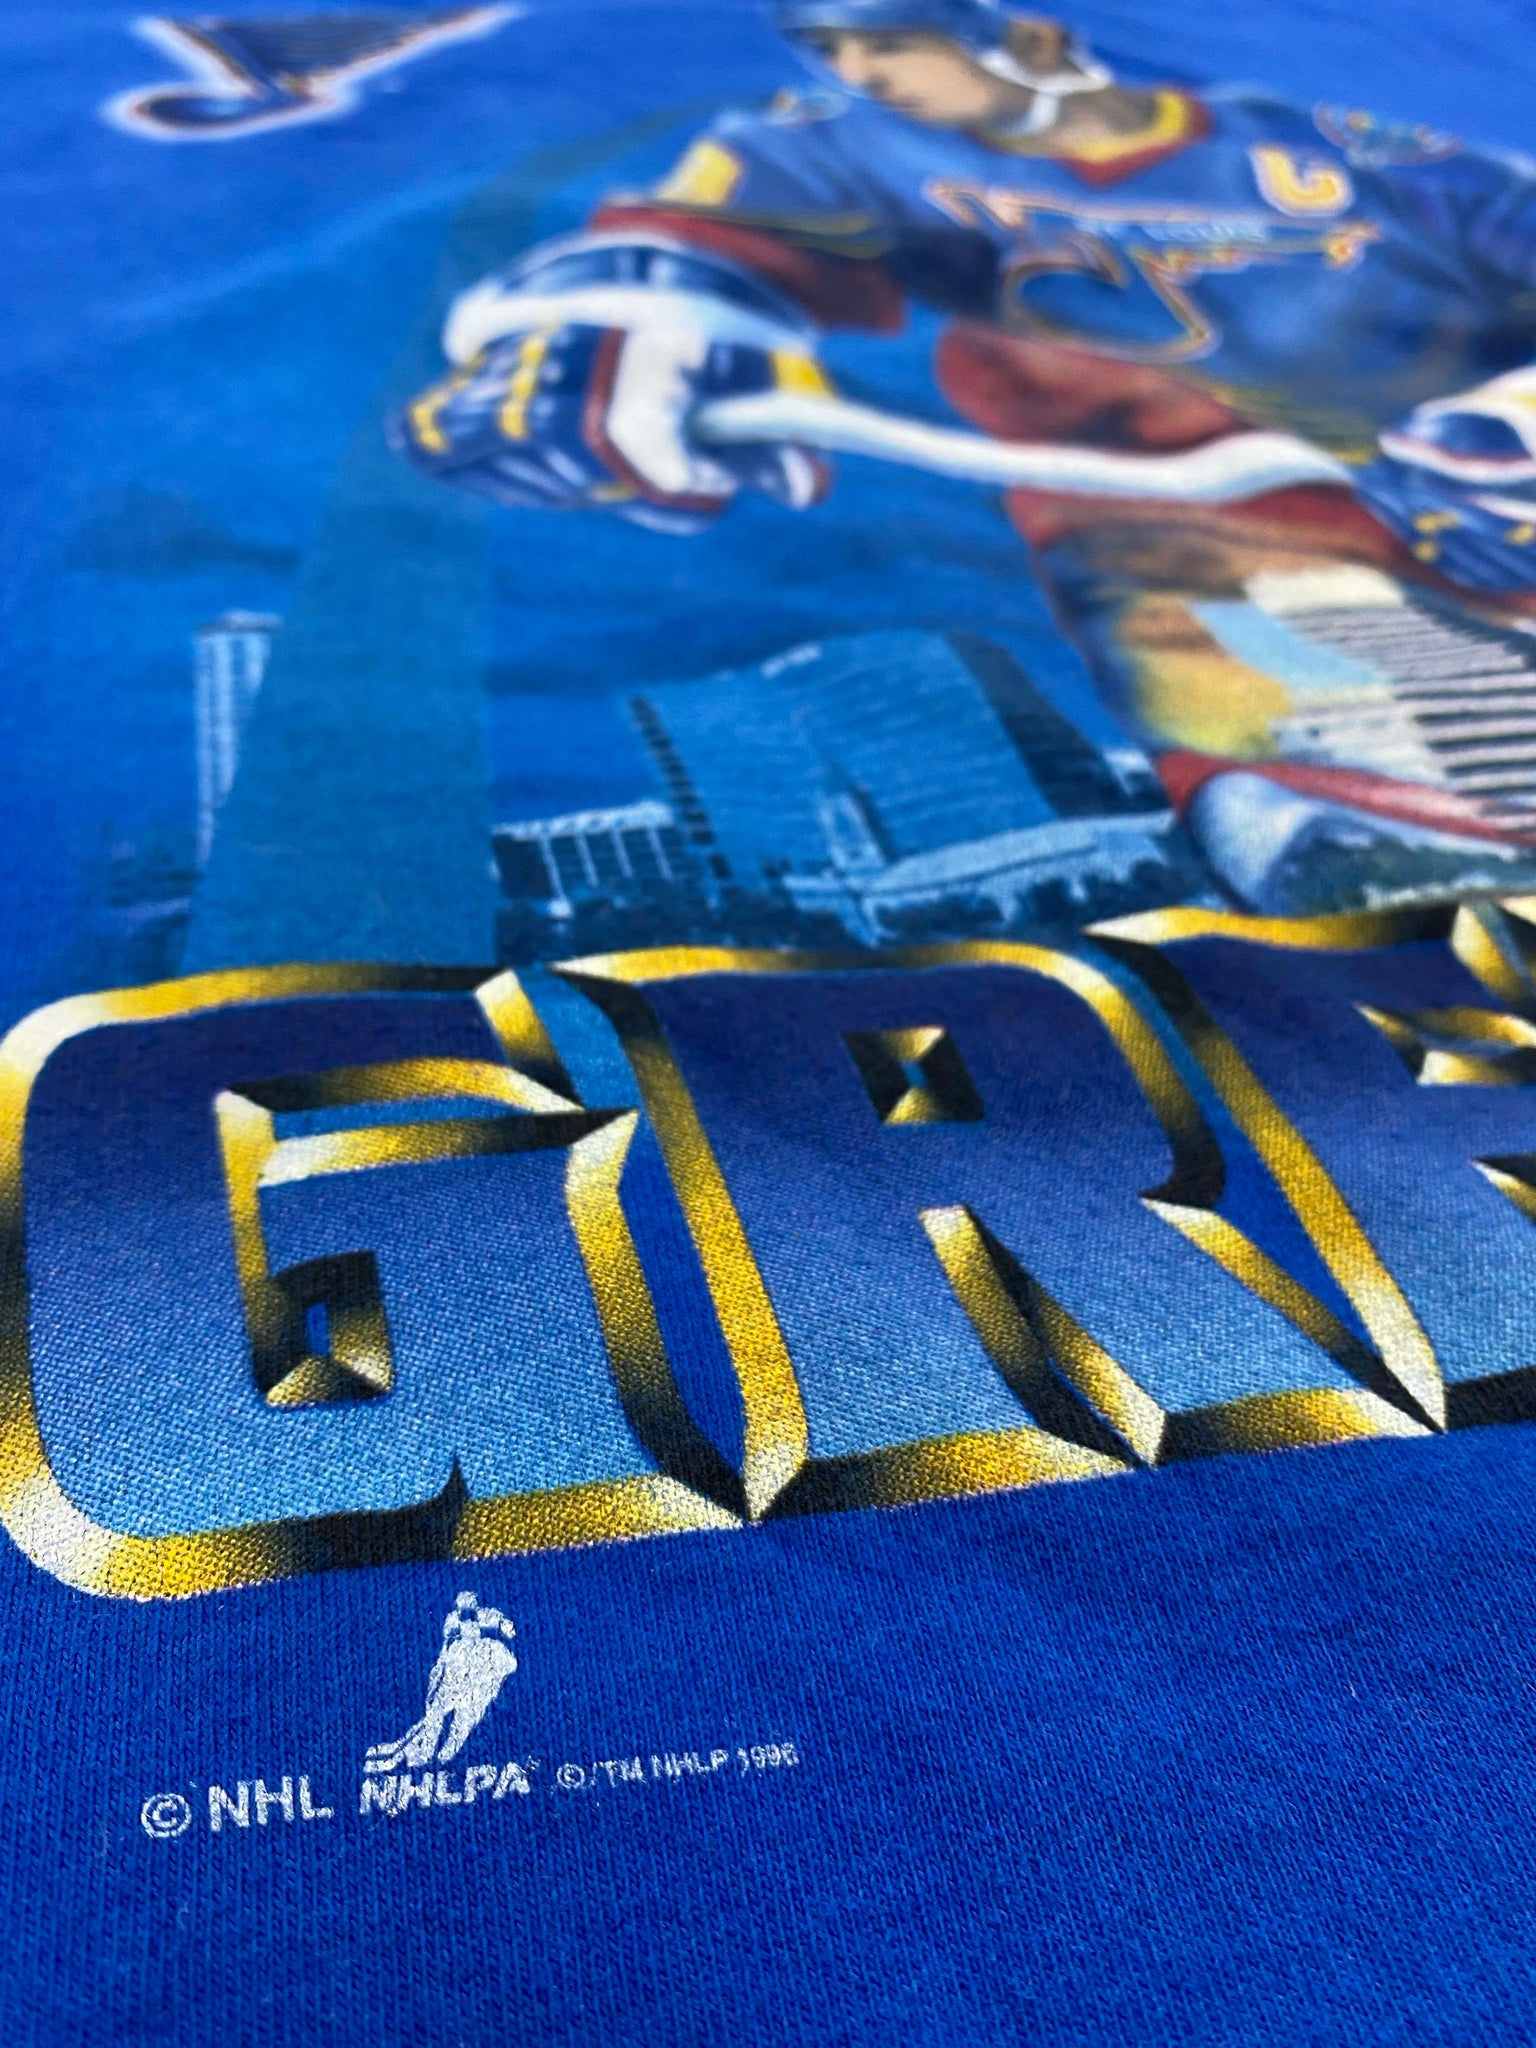 Vintage NHL (Pro Player) - St. Louis Blues Gretzky MVP T-Shirt 1996 Medium